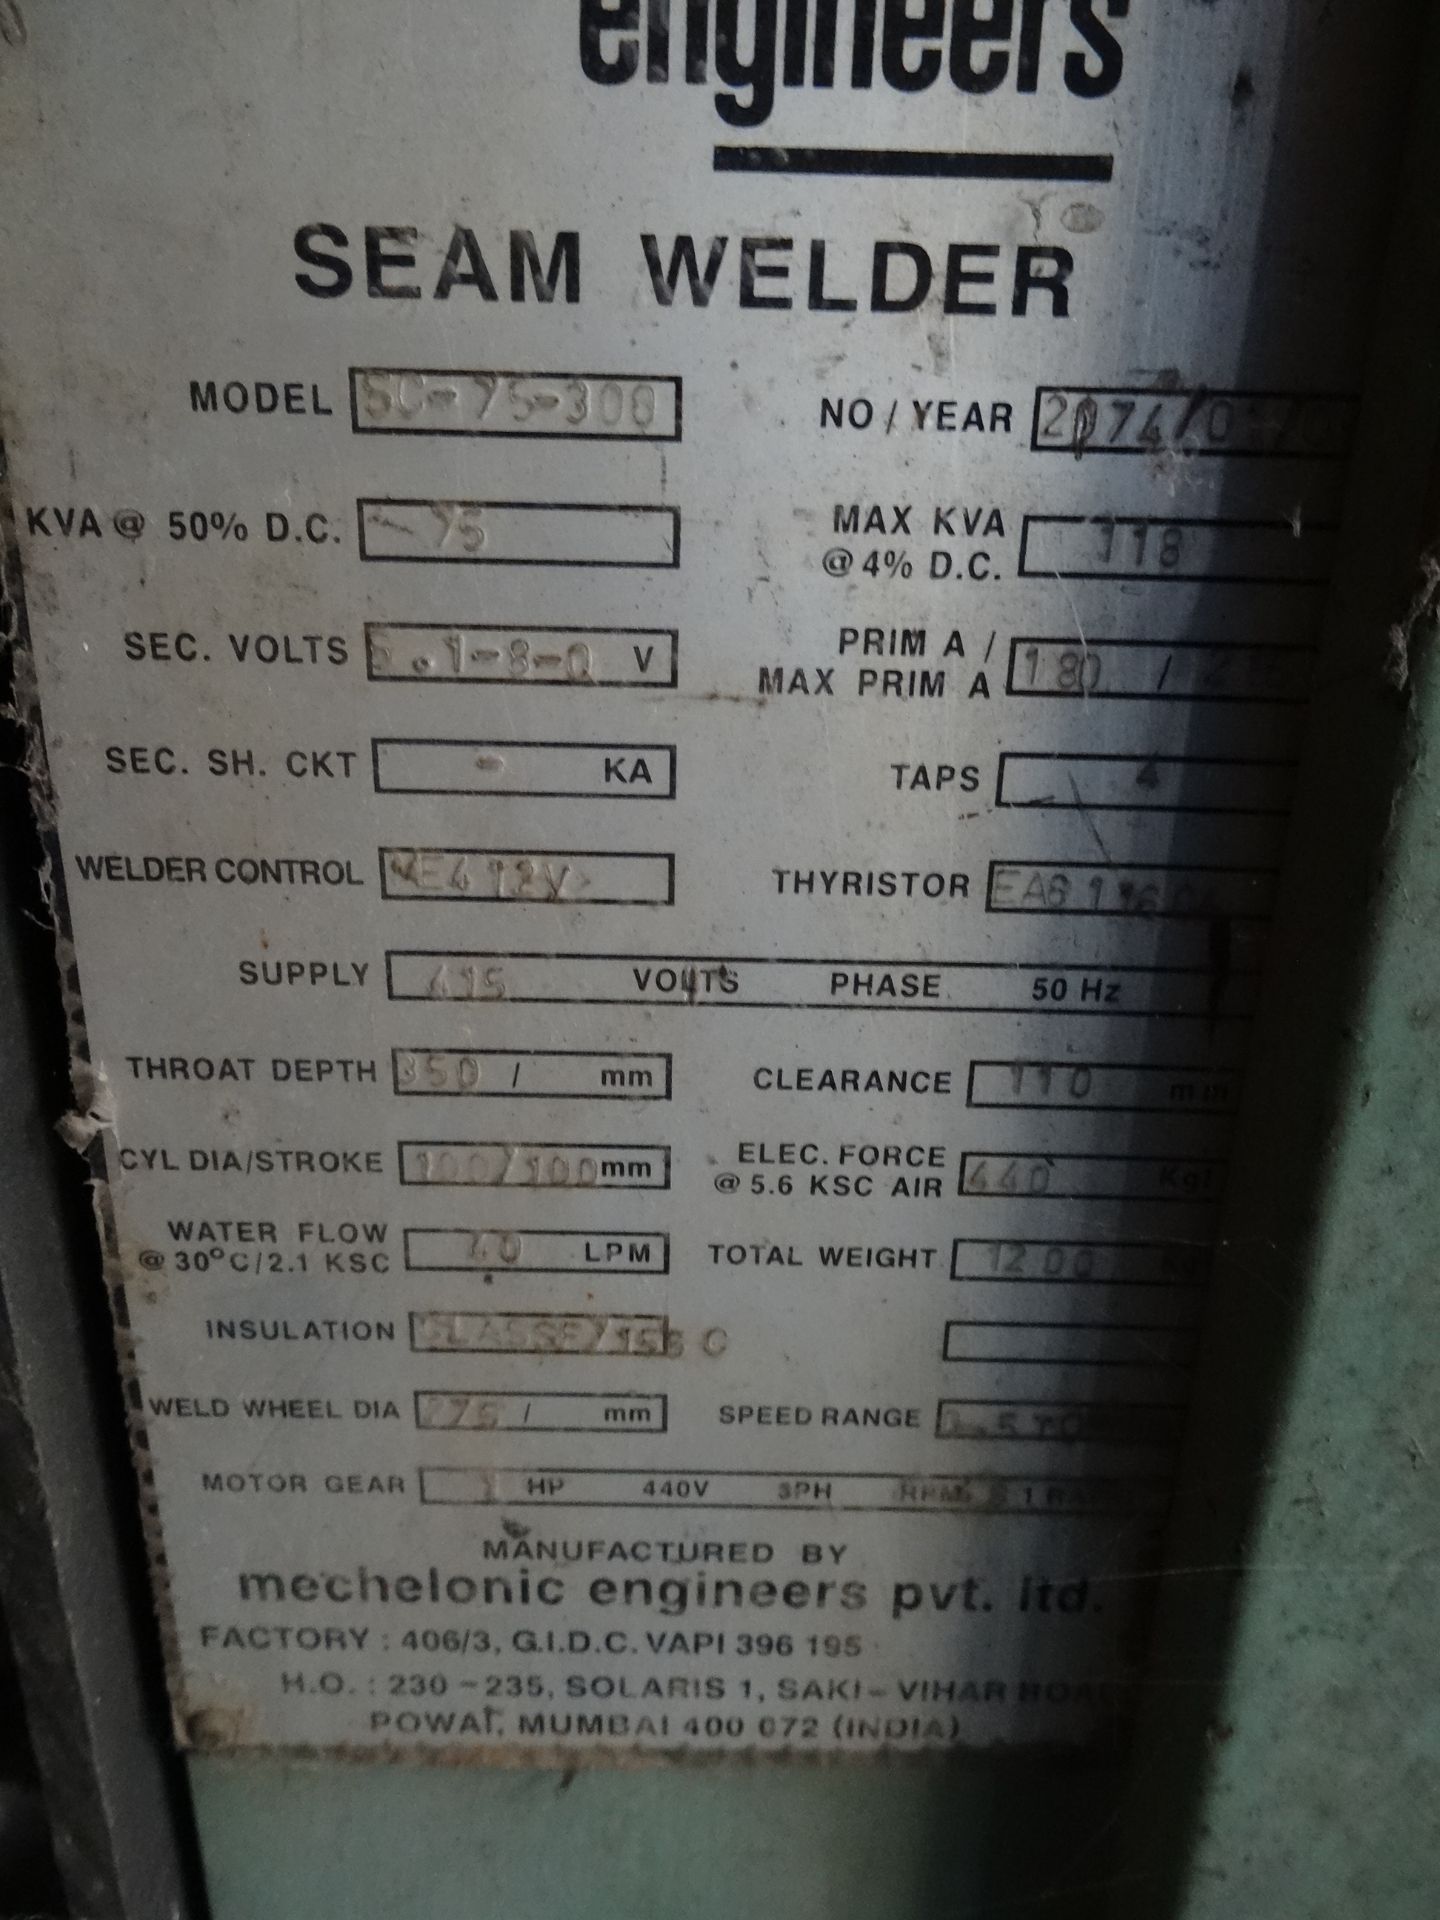 2001 MECHELONIC ENGINEERS SC-75-300 Seam Welder, s/n 2074, 75 KVA, 350 MM Throat Depth (Nagpur) - Image 2 of 2